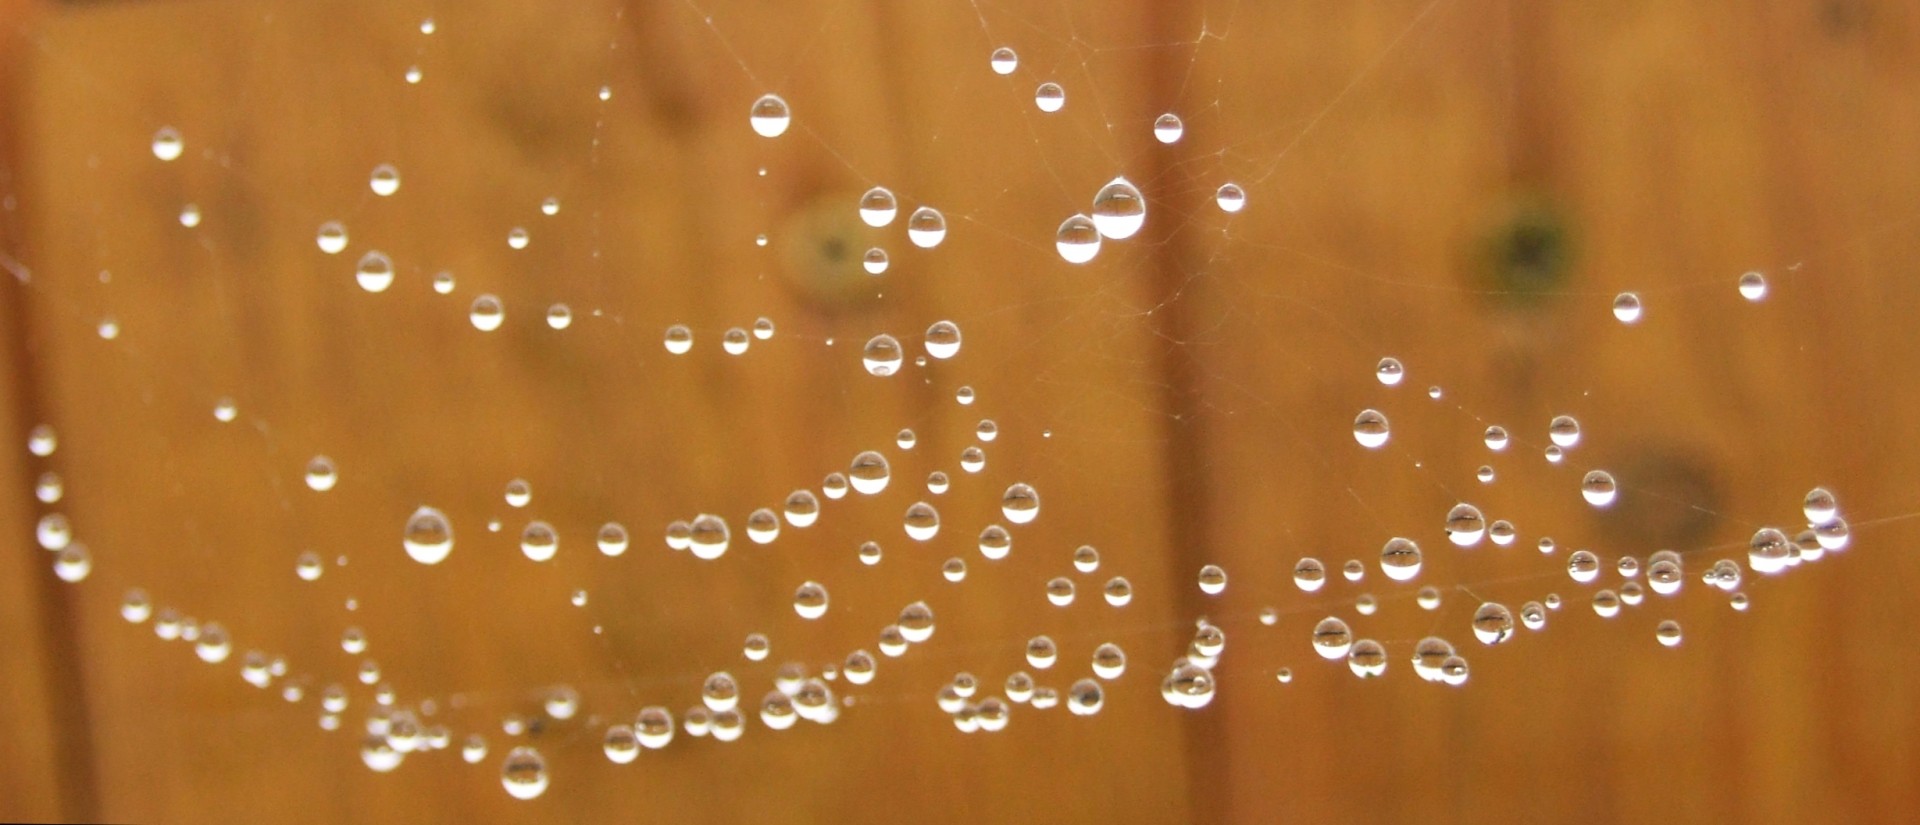 cobweb pearls water spider free photo